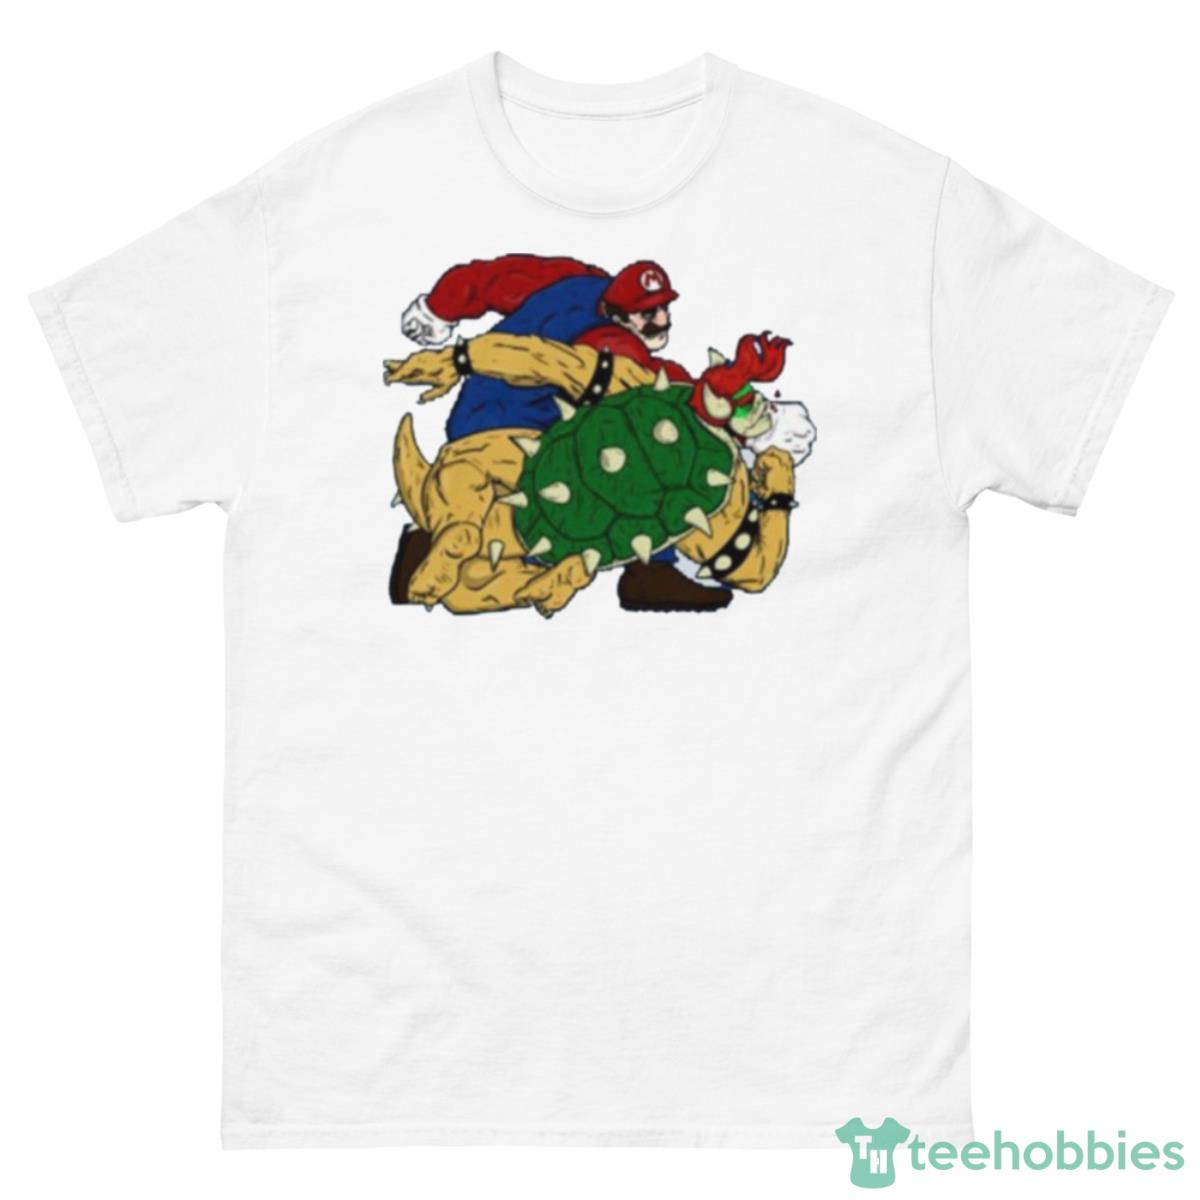 Plumber Punch Super Mario Bros Shirt - 500 Men’s Classic Tee Gildan